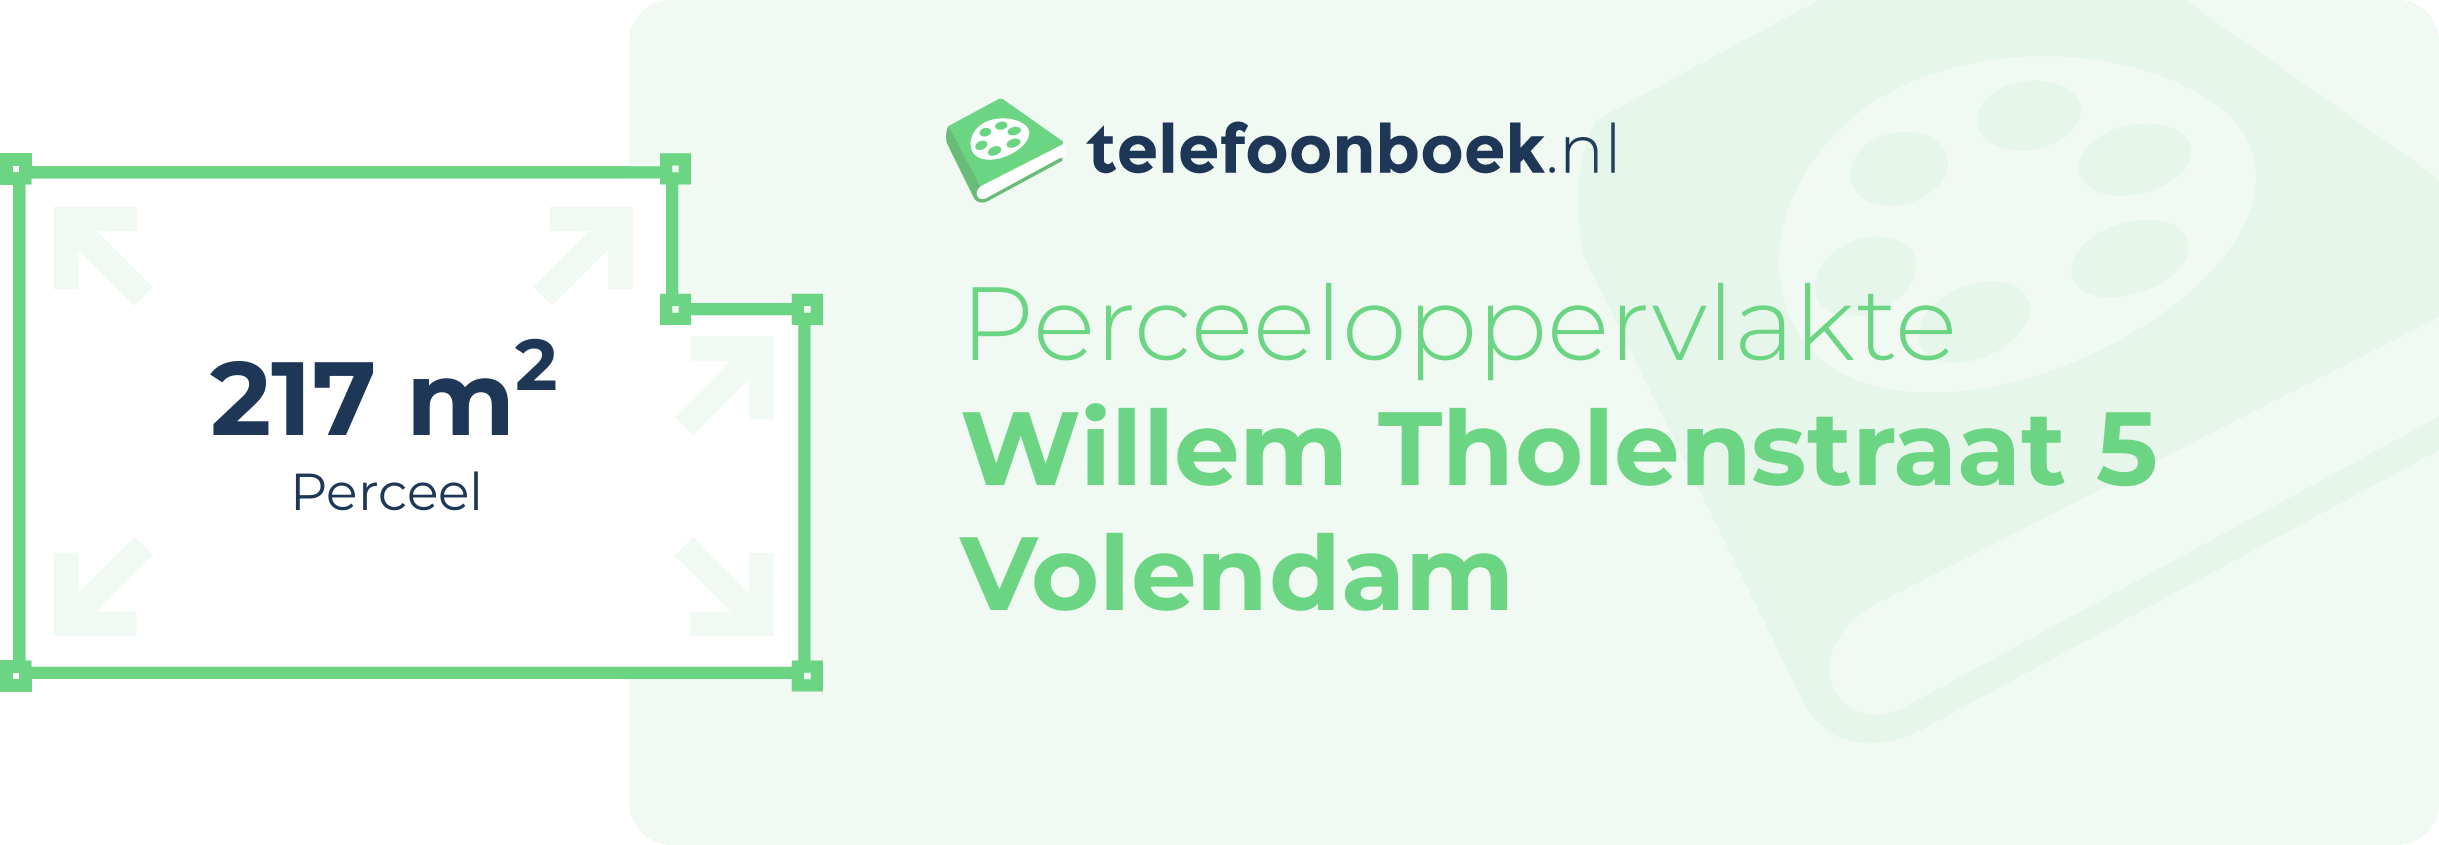 Perceeloppervlakte Willem Tholenstraat 5 Volendam